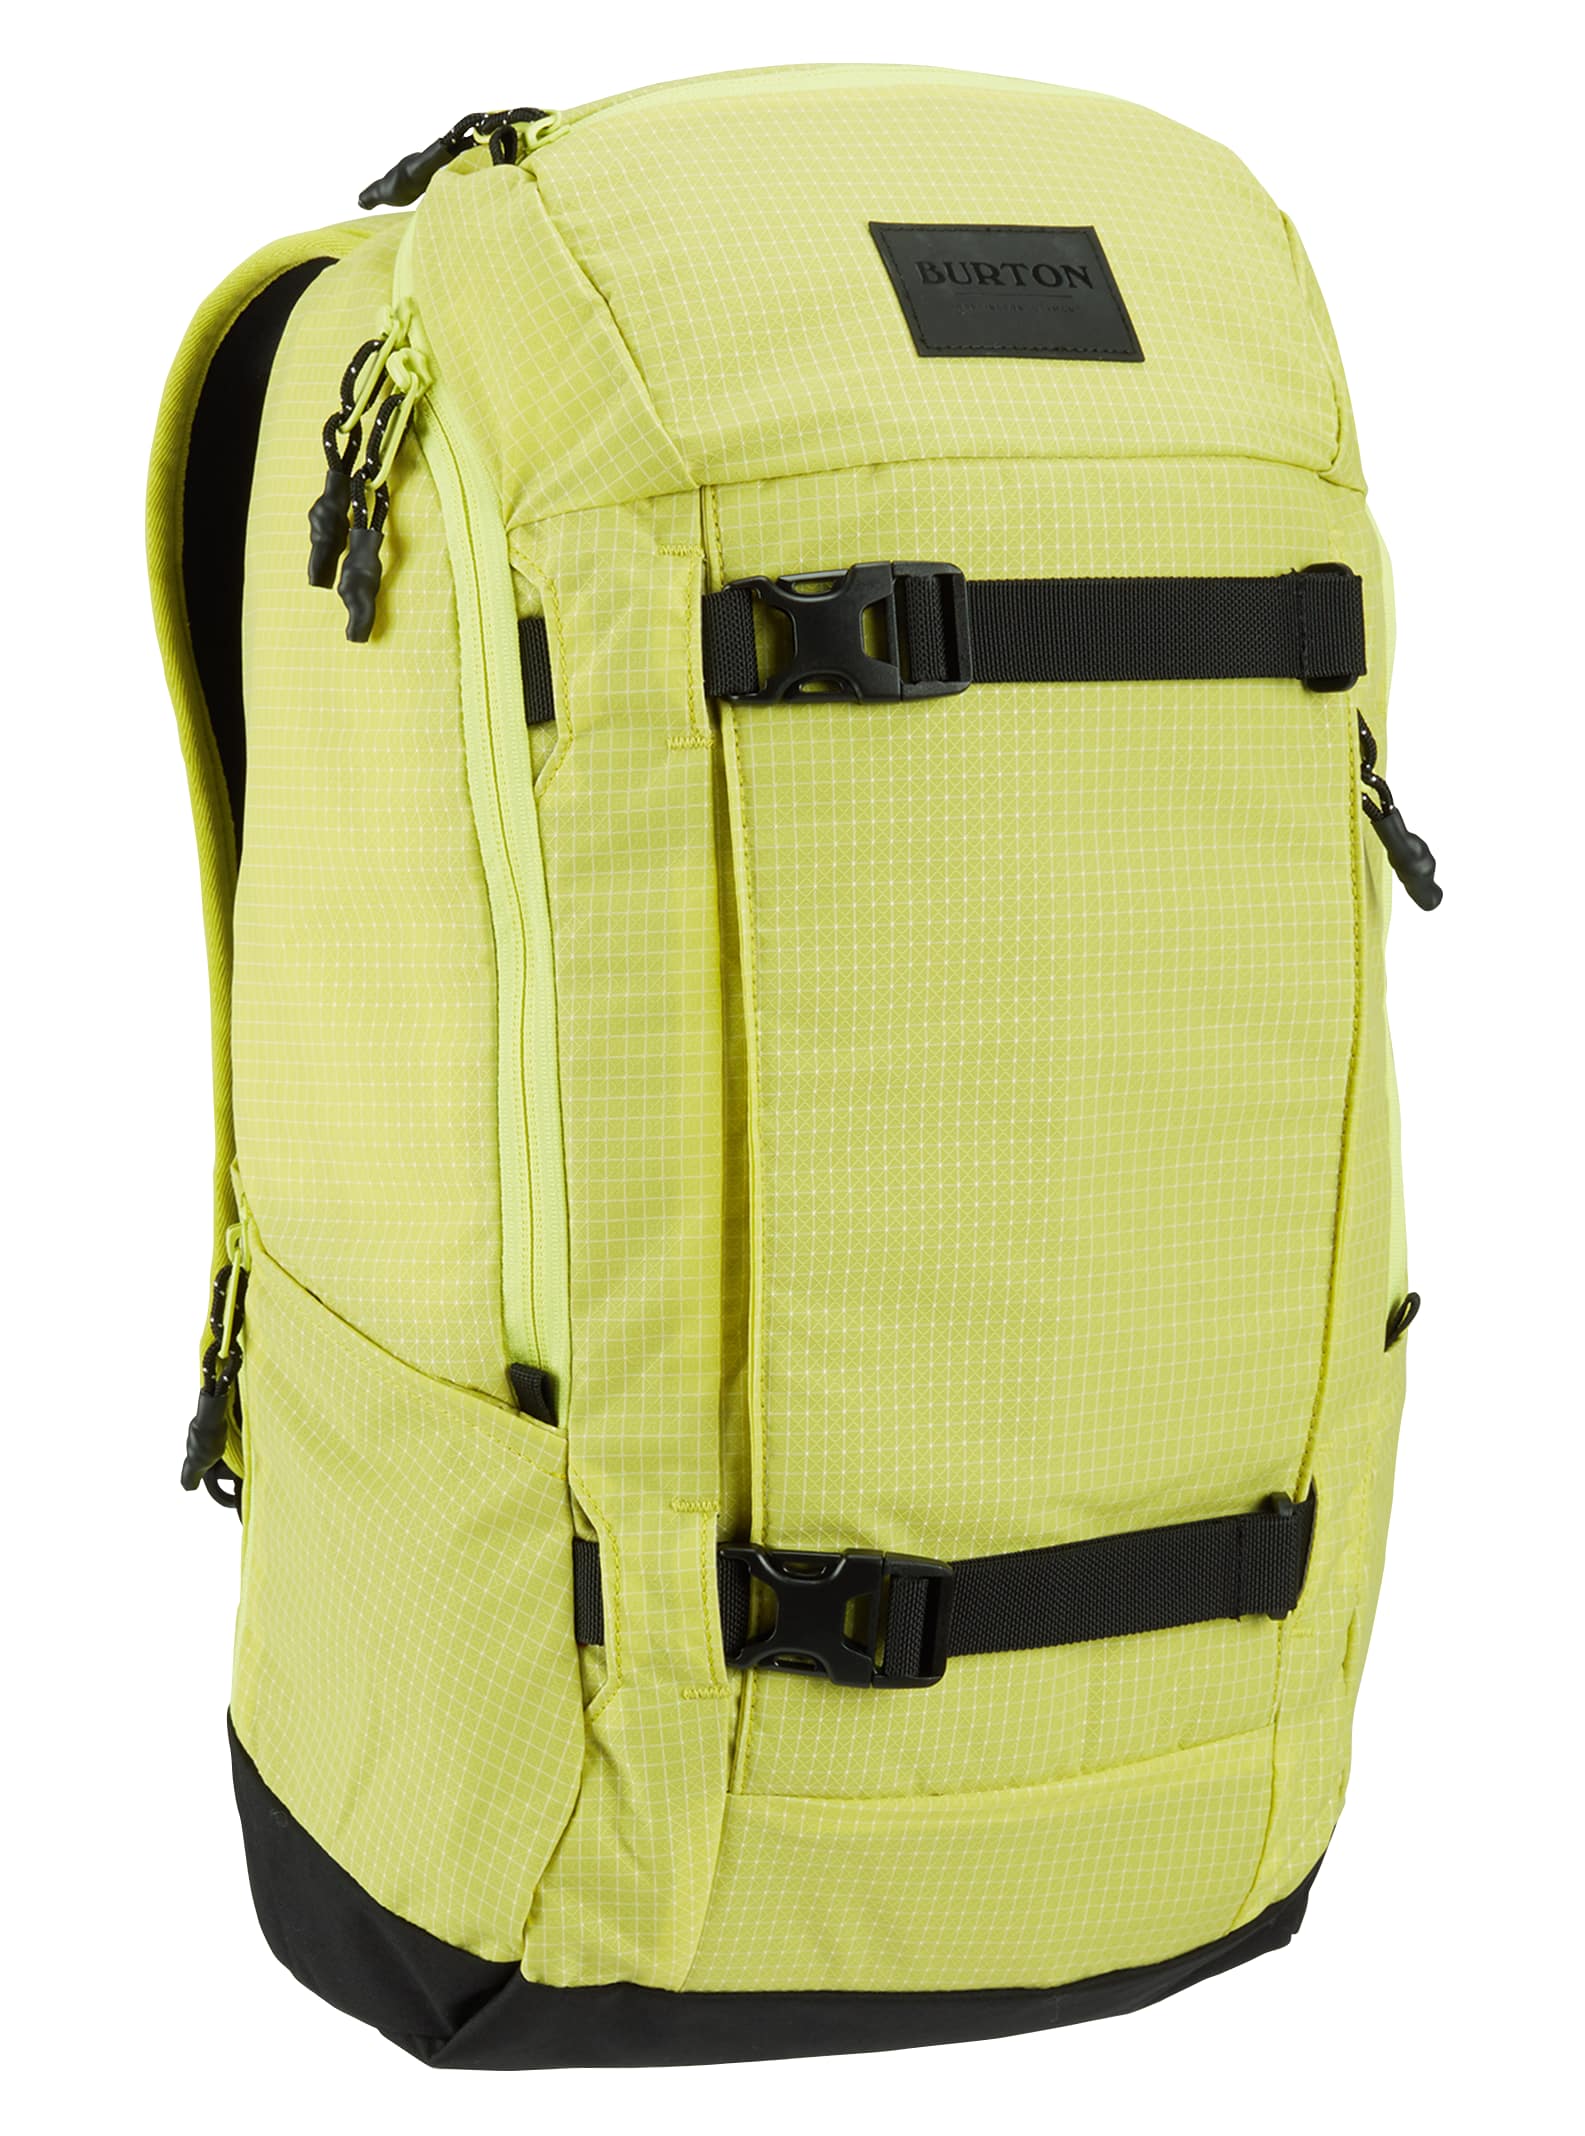 Burton Kilo 2.0 27L Backpack | Burton.com Winter 2021 CA